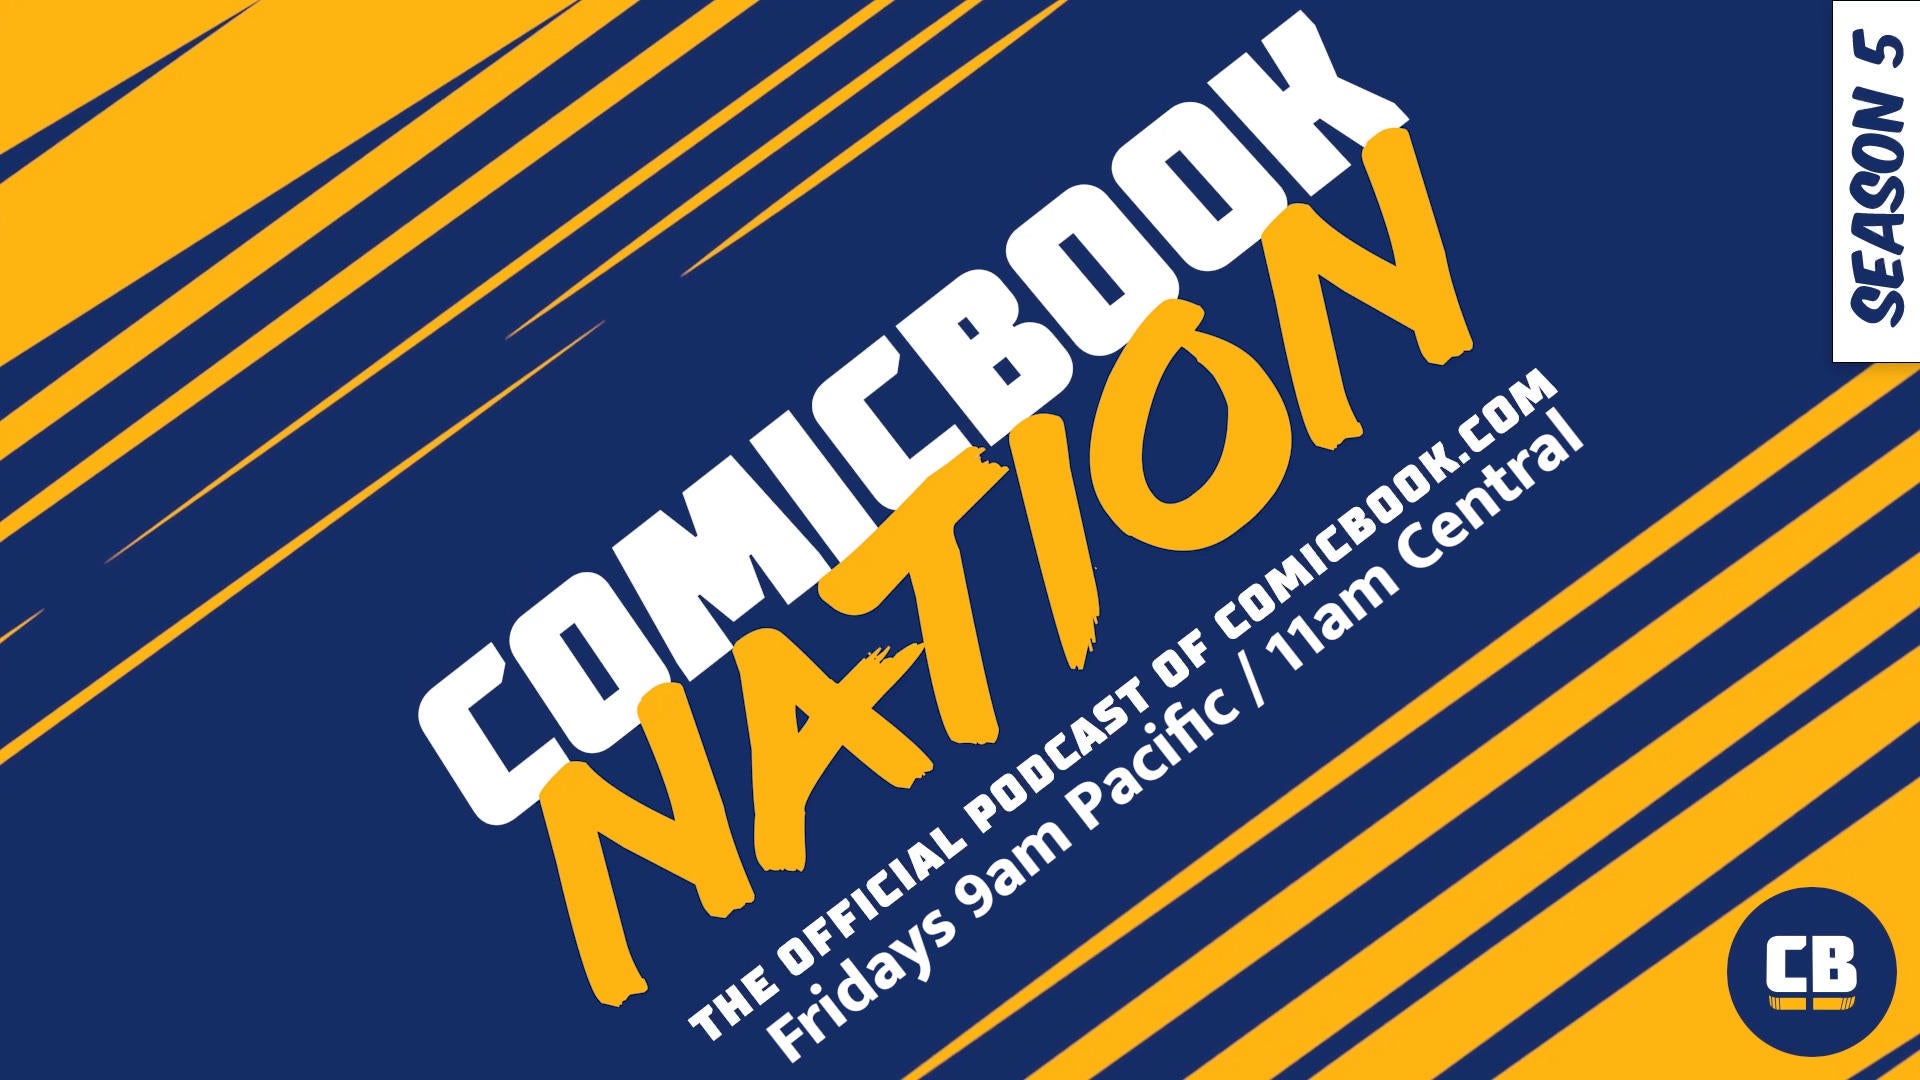 comicbook-nation-ep-5x45-promo-00-00-18-12-still001.jpg